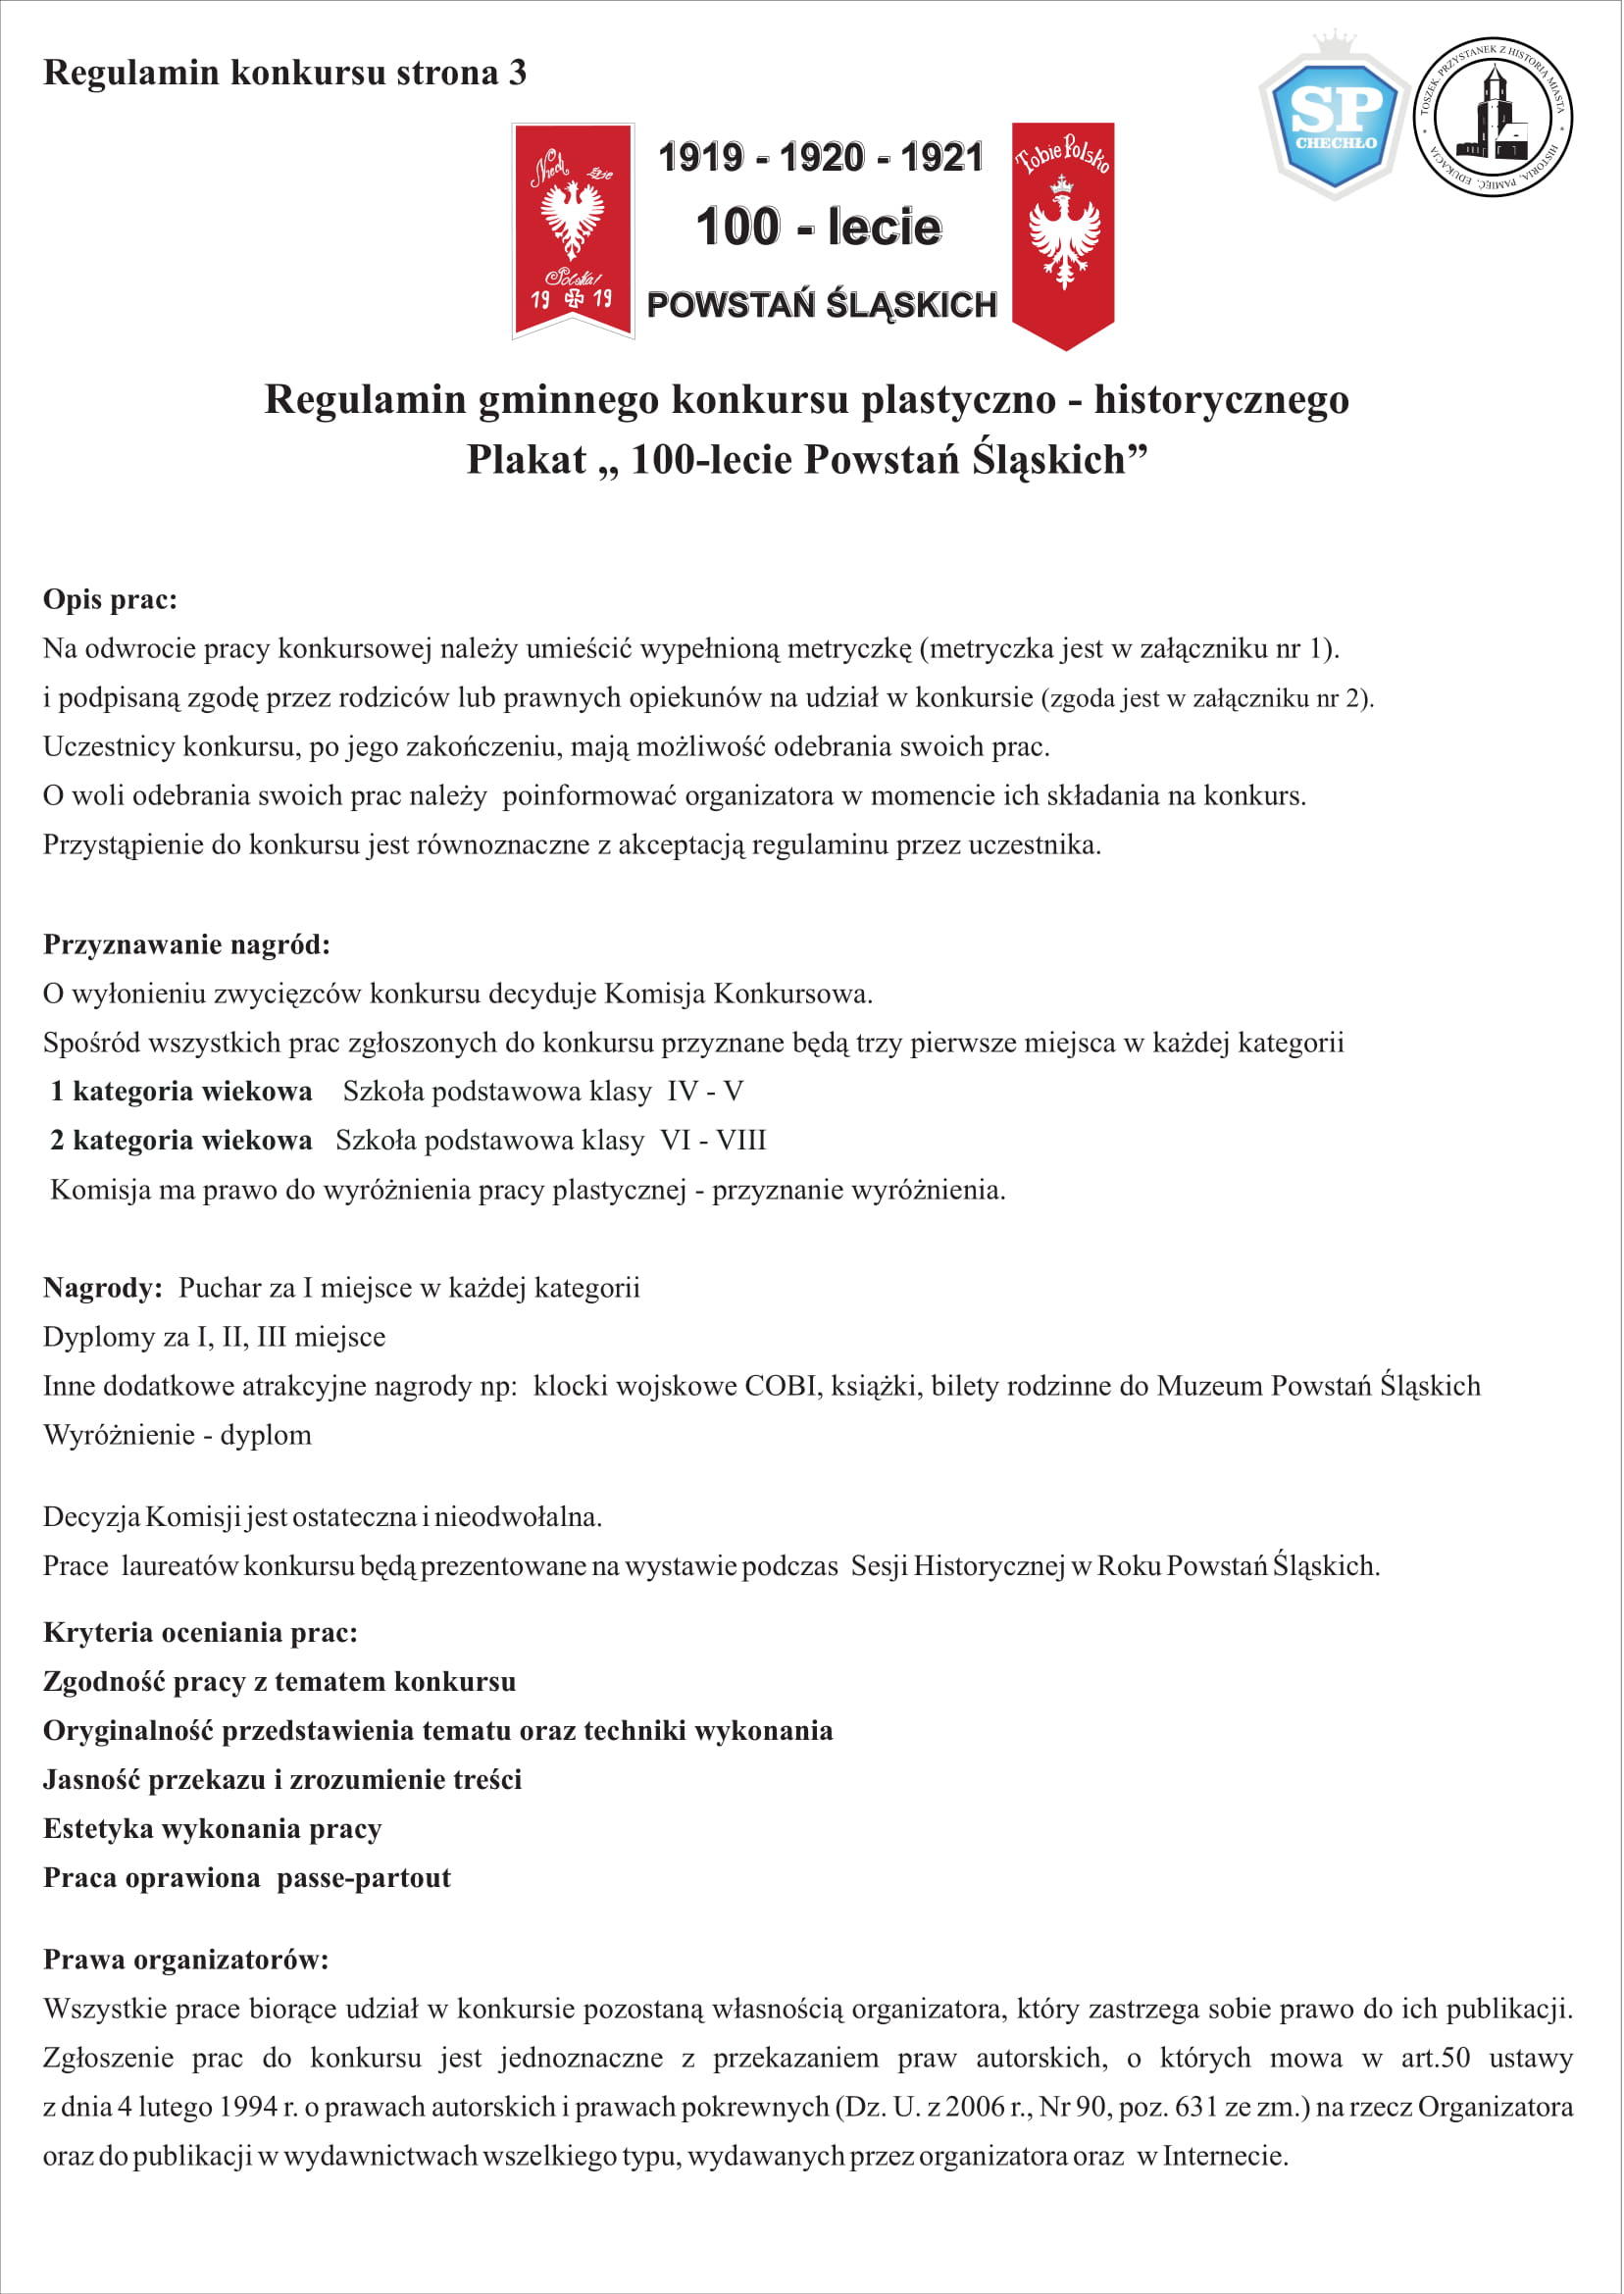 SP Chechlo Regulamin Szkolnego Konkursu Plakat na 100 lecie Powstan Slaskich 2019-1-3